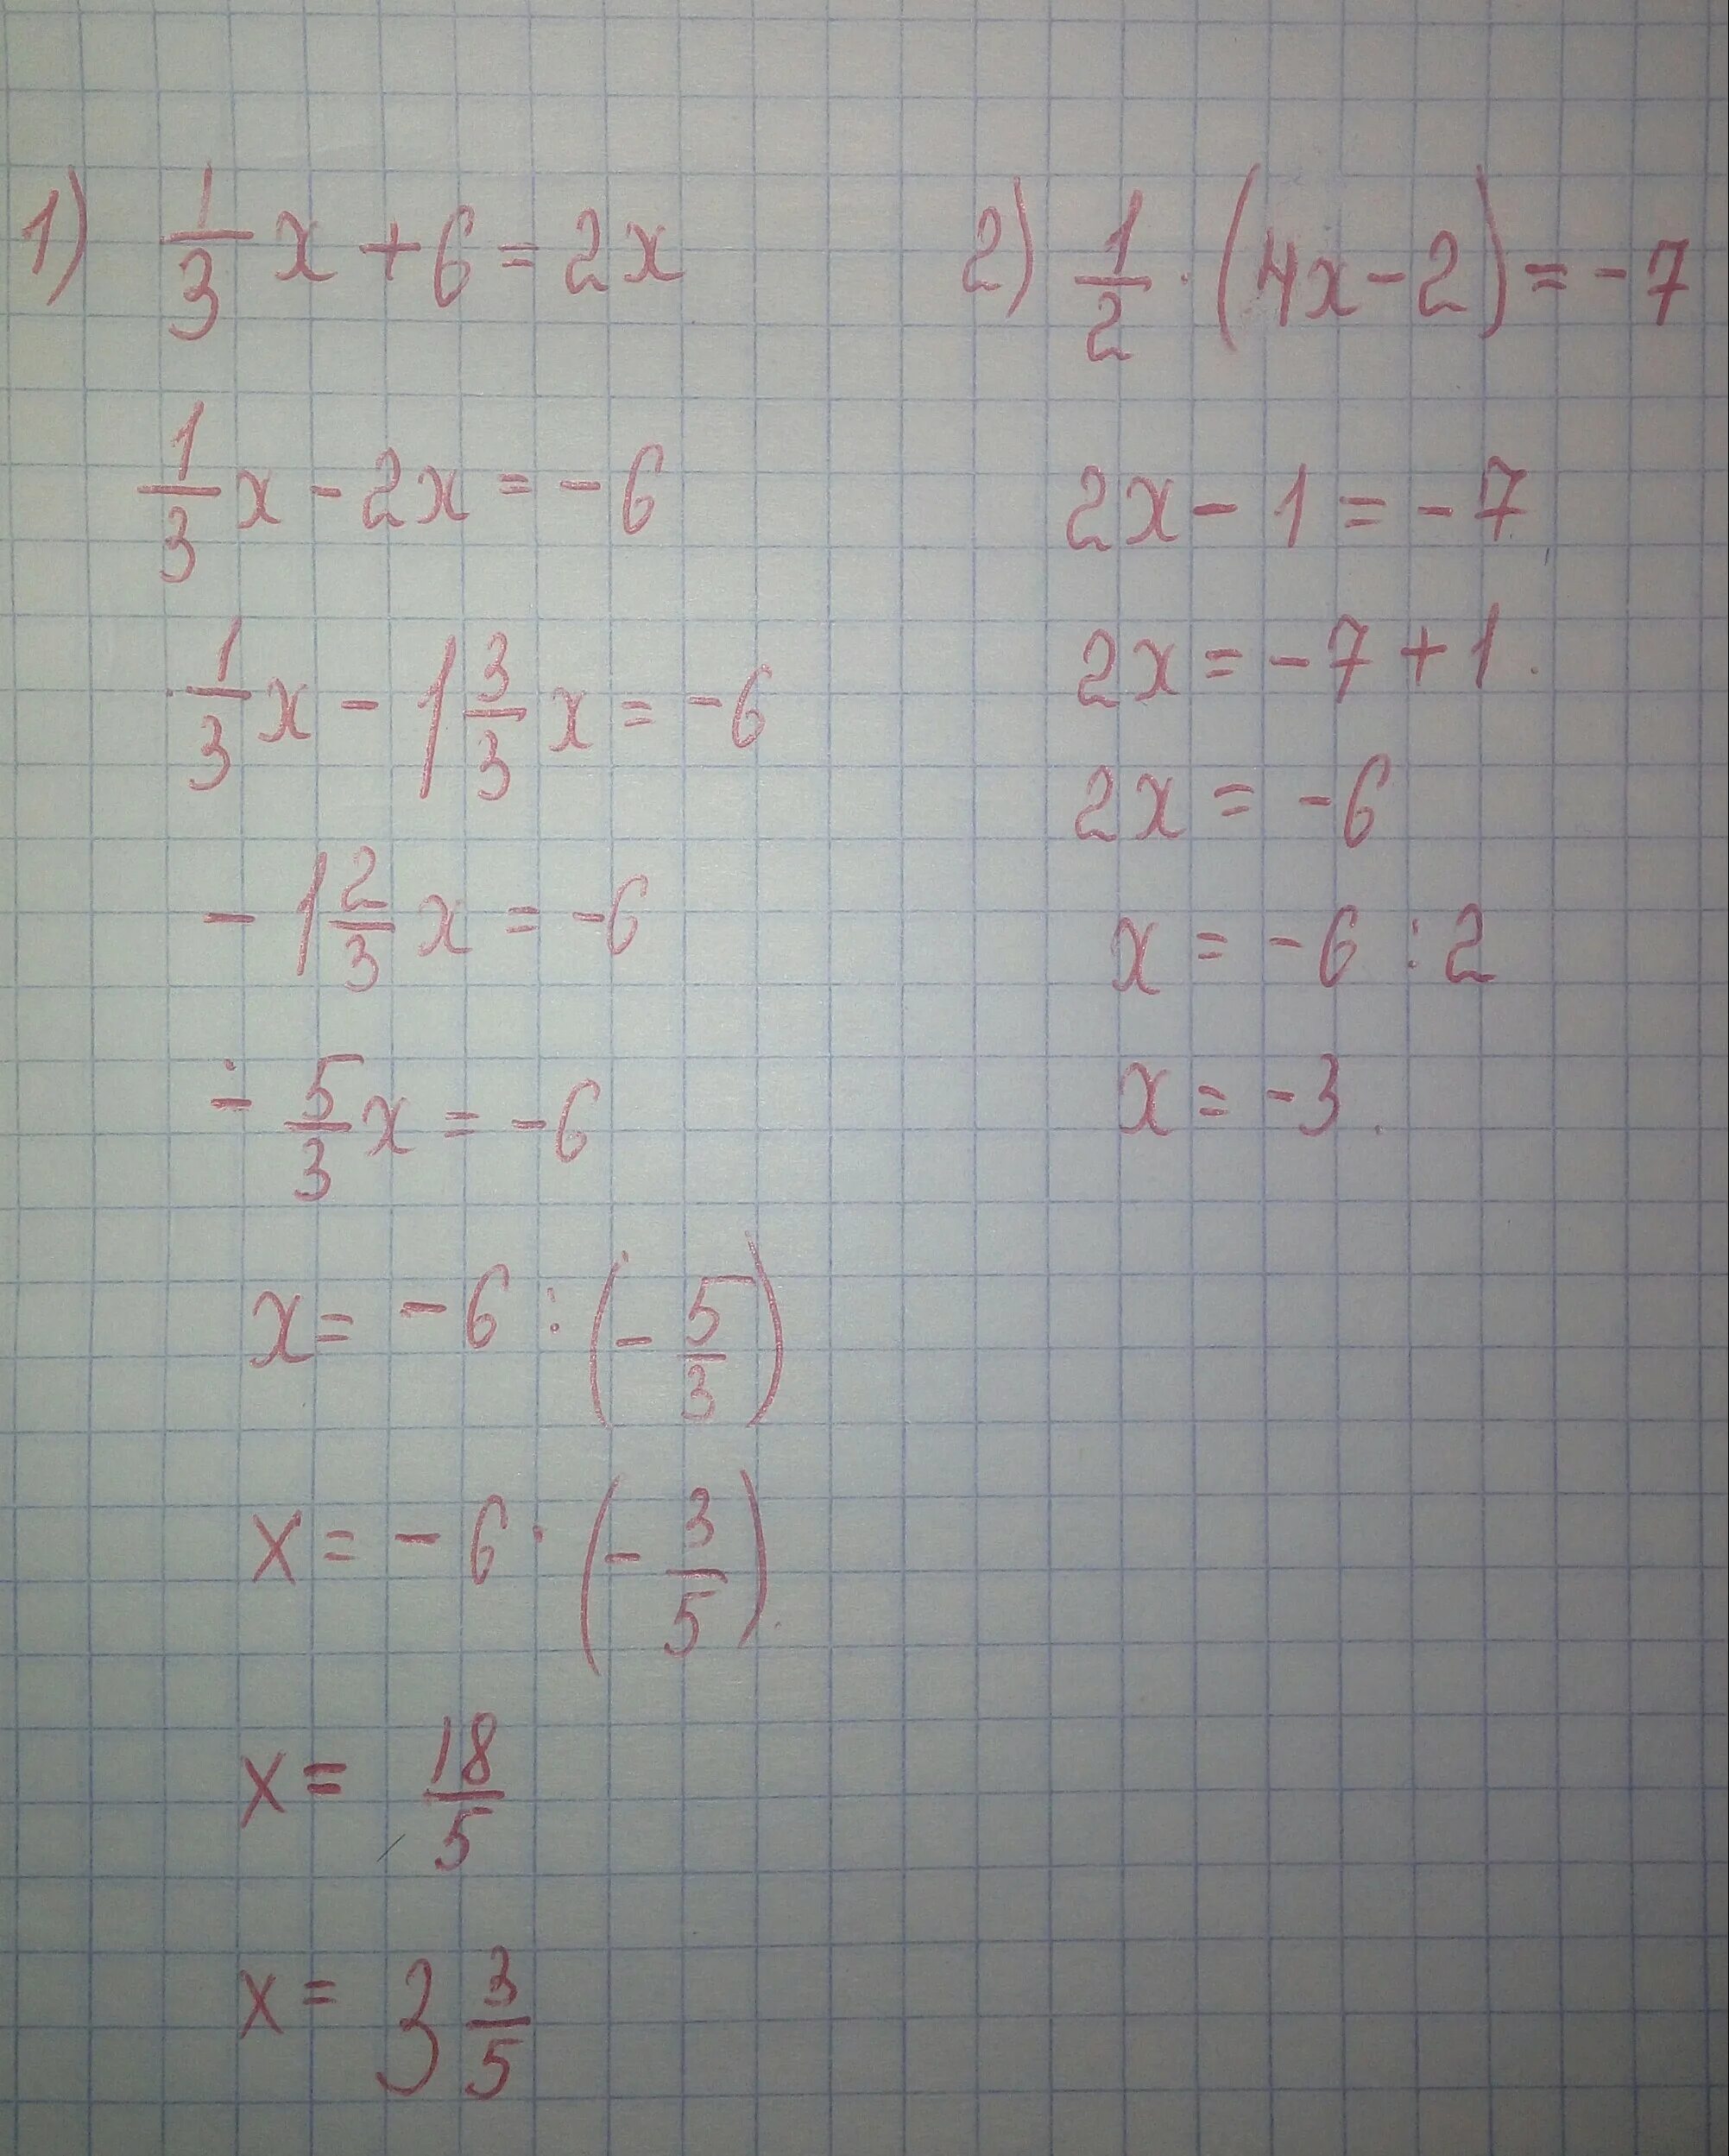 7 x 63 4. 63:(14-X)=7. X^2-2x-63. 63x63 решения. Уравнение 63 14-х 7.